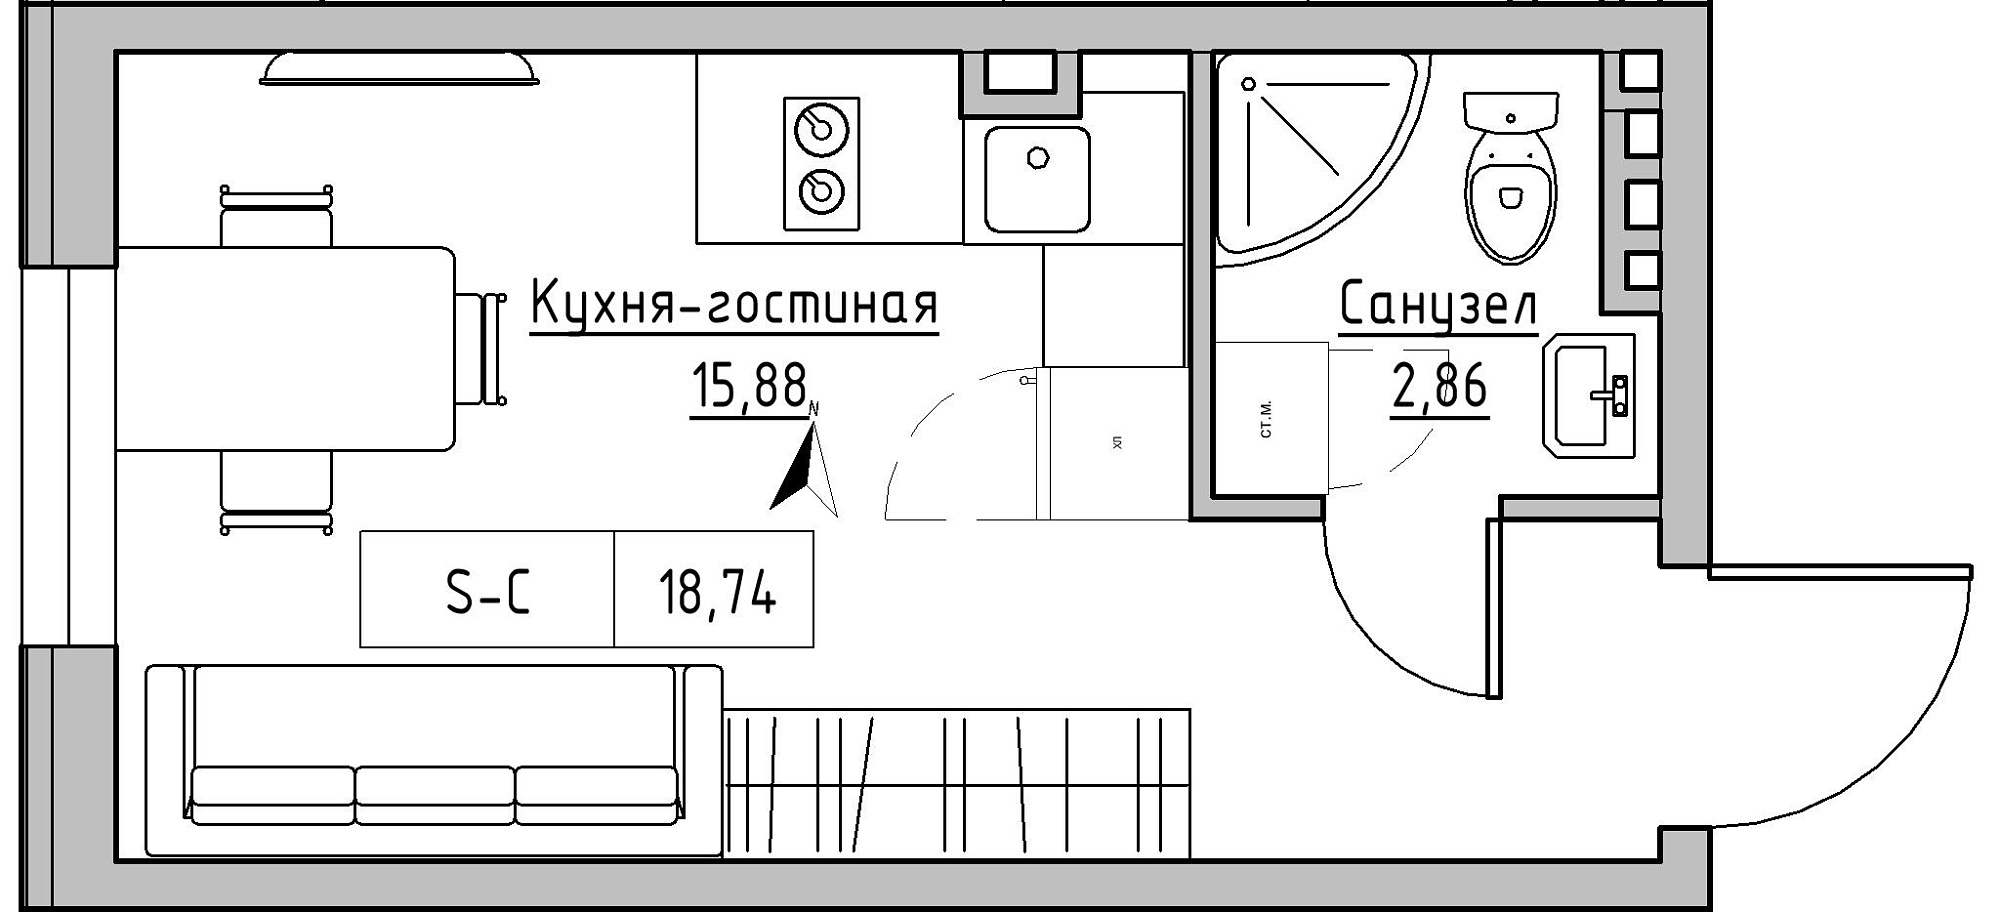 Планировка Smart-квартира площей 18.74м2, KS-024-01/0011.